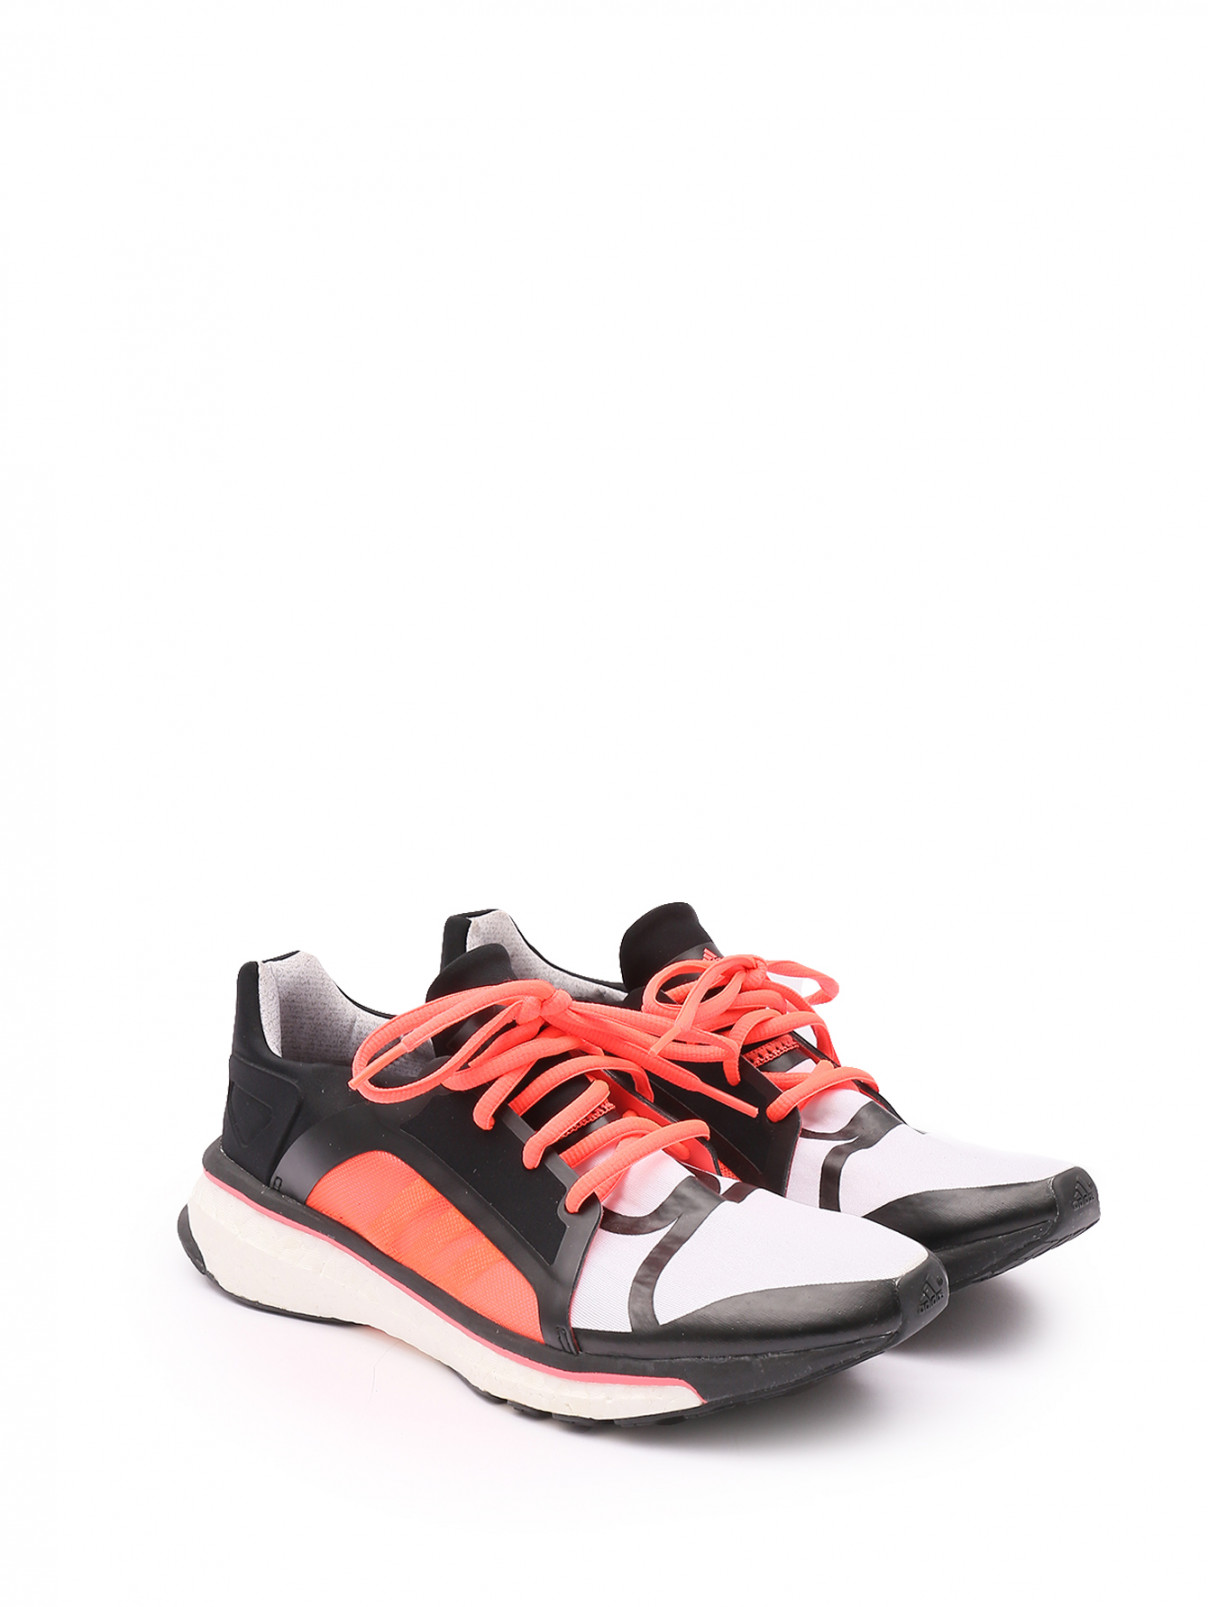 Кроссовки из текстиля на шнурках adidas by Stella McCartney  –  Общий вид  – Цвет:  Мультиколор